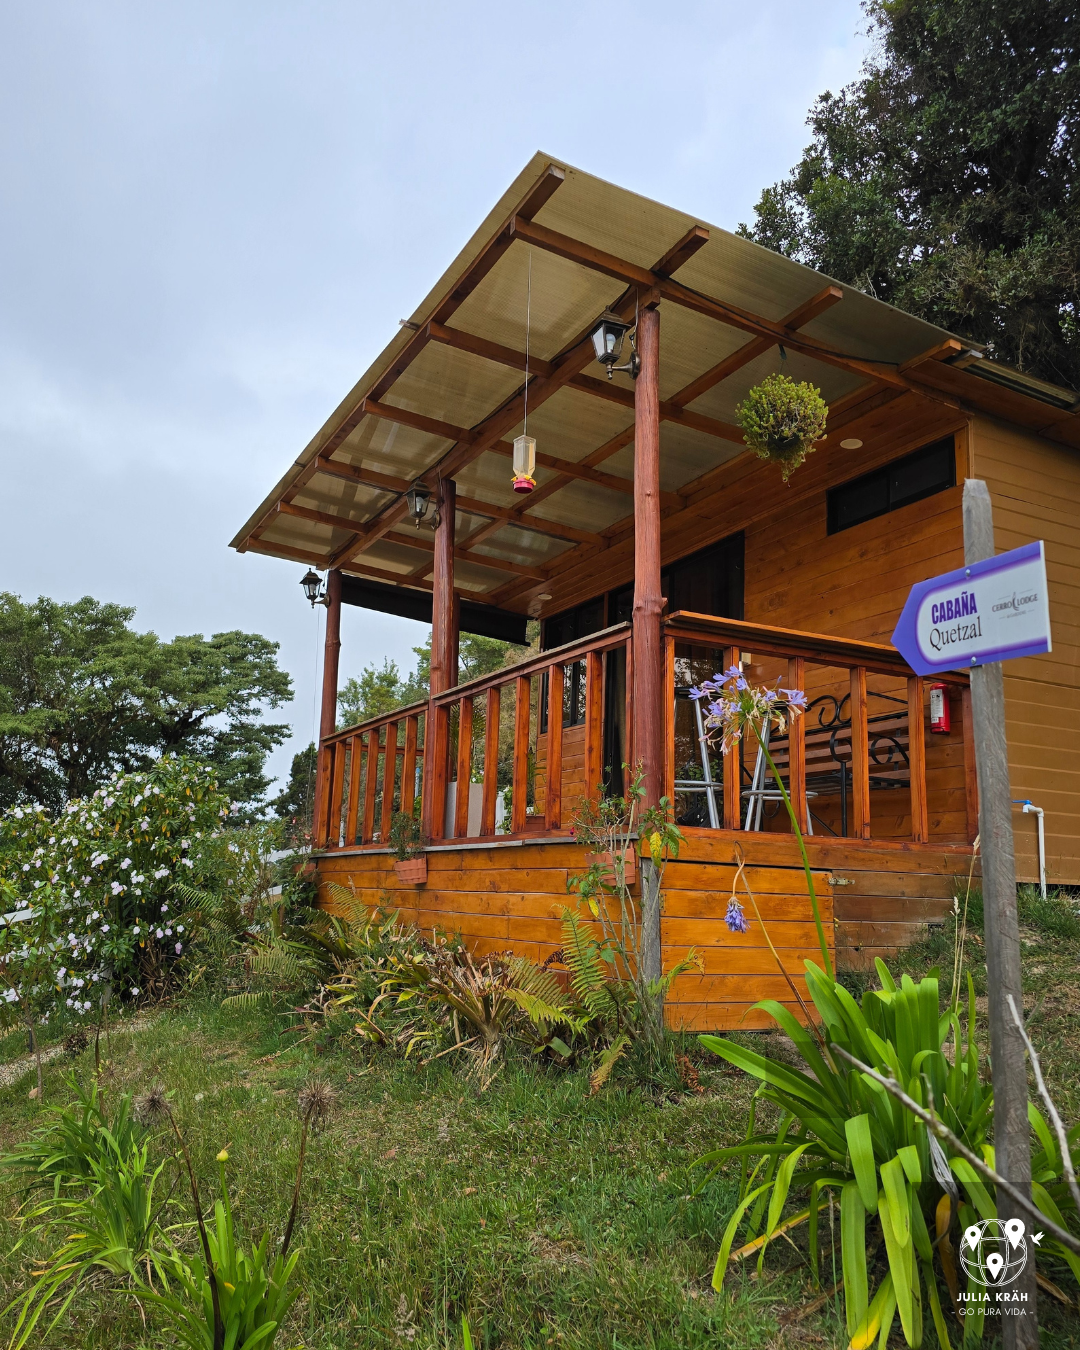 Holzhütte "Quetzal" auf dem Cerro de La Muerte, Costa Rica